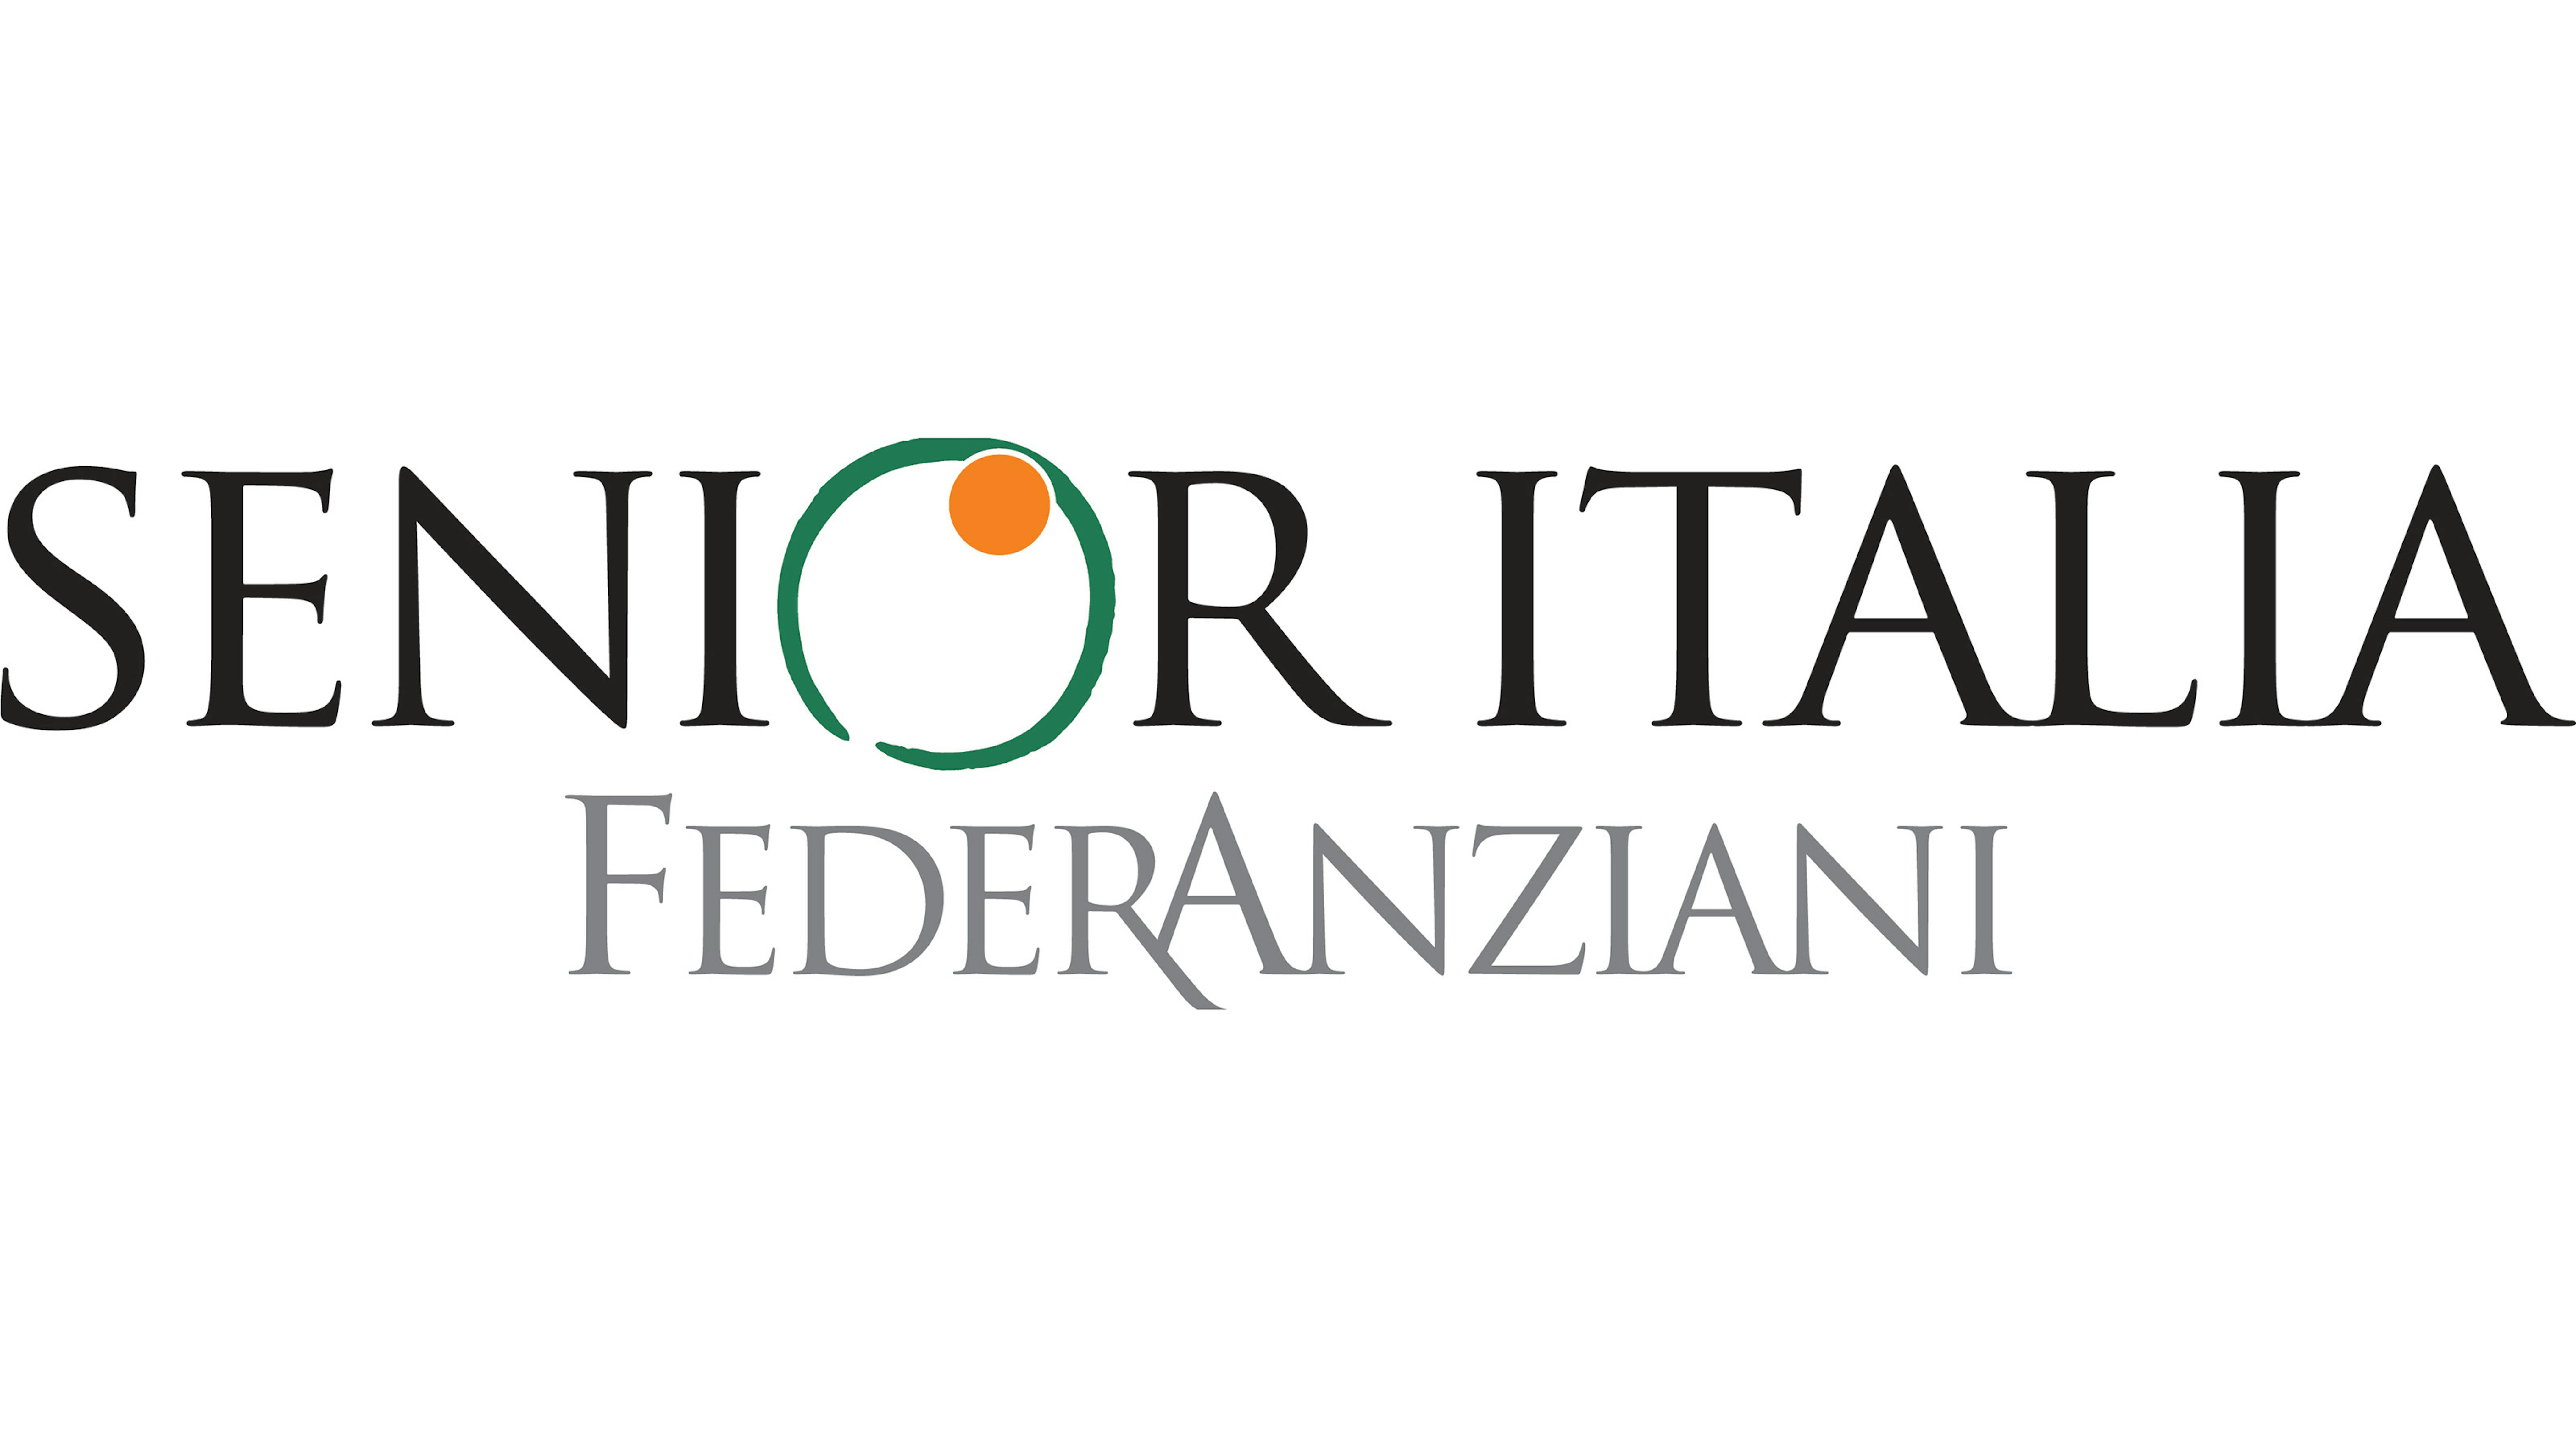 Federanziani Senior Italia